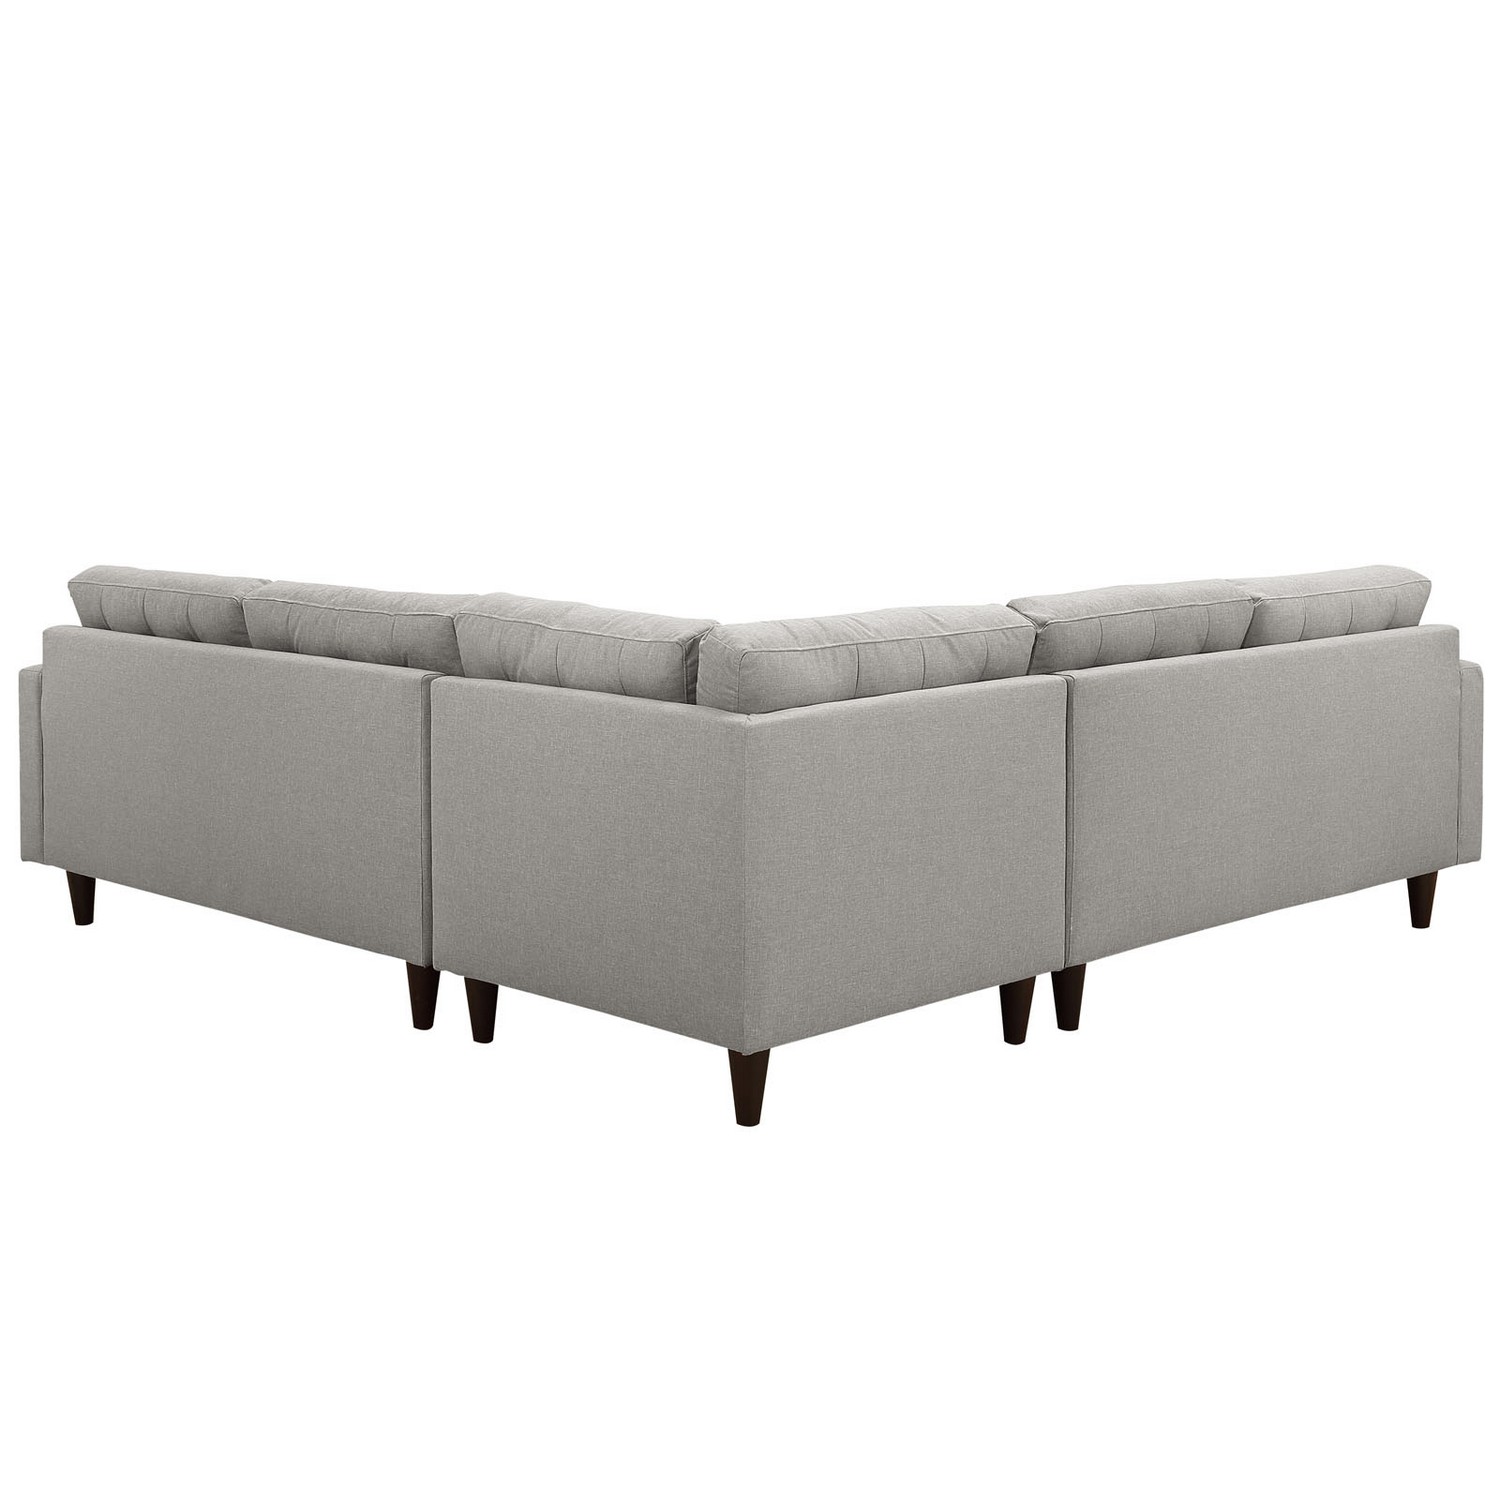 Modway Empress 3 Piece Fabric Sectional Sofa Set - Light Gray